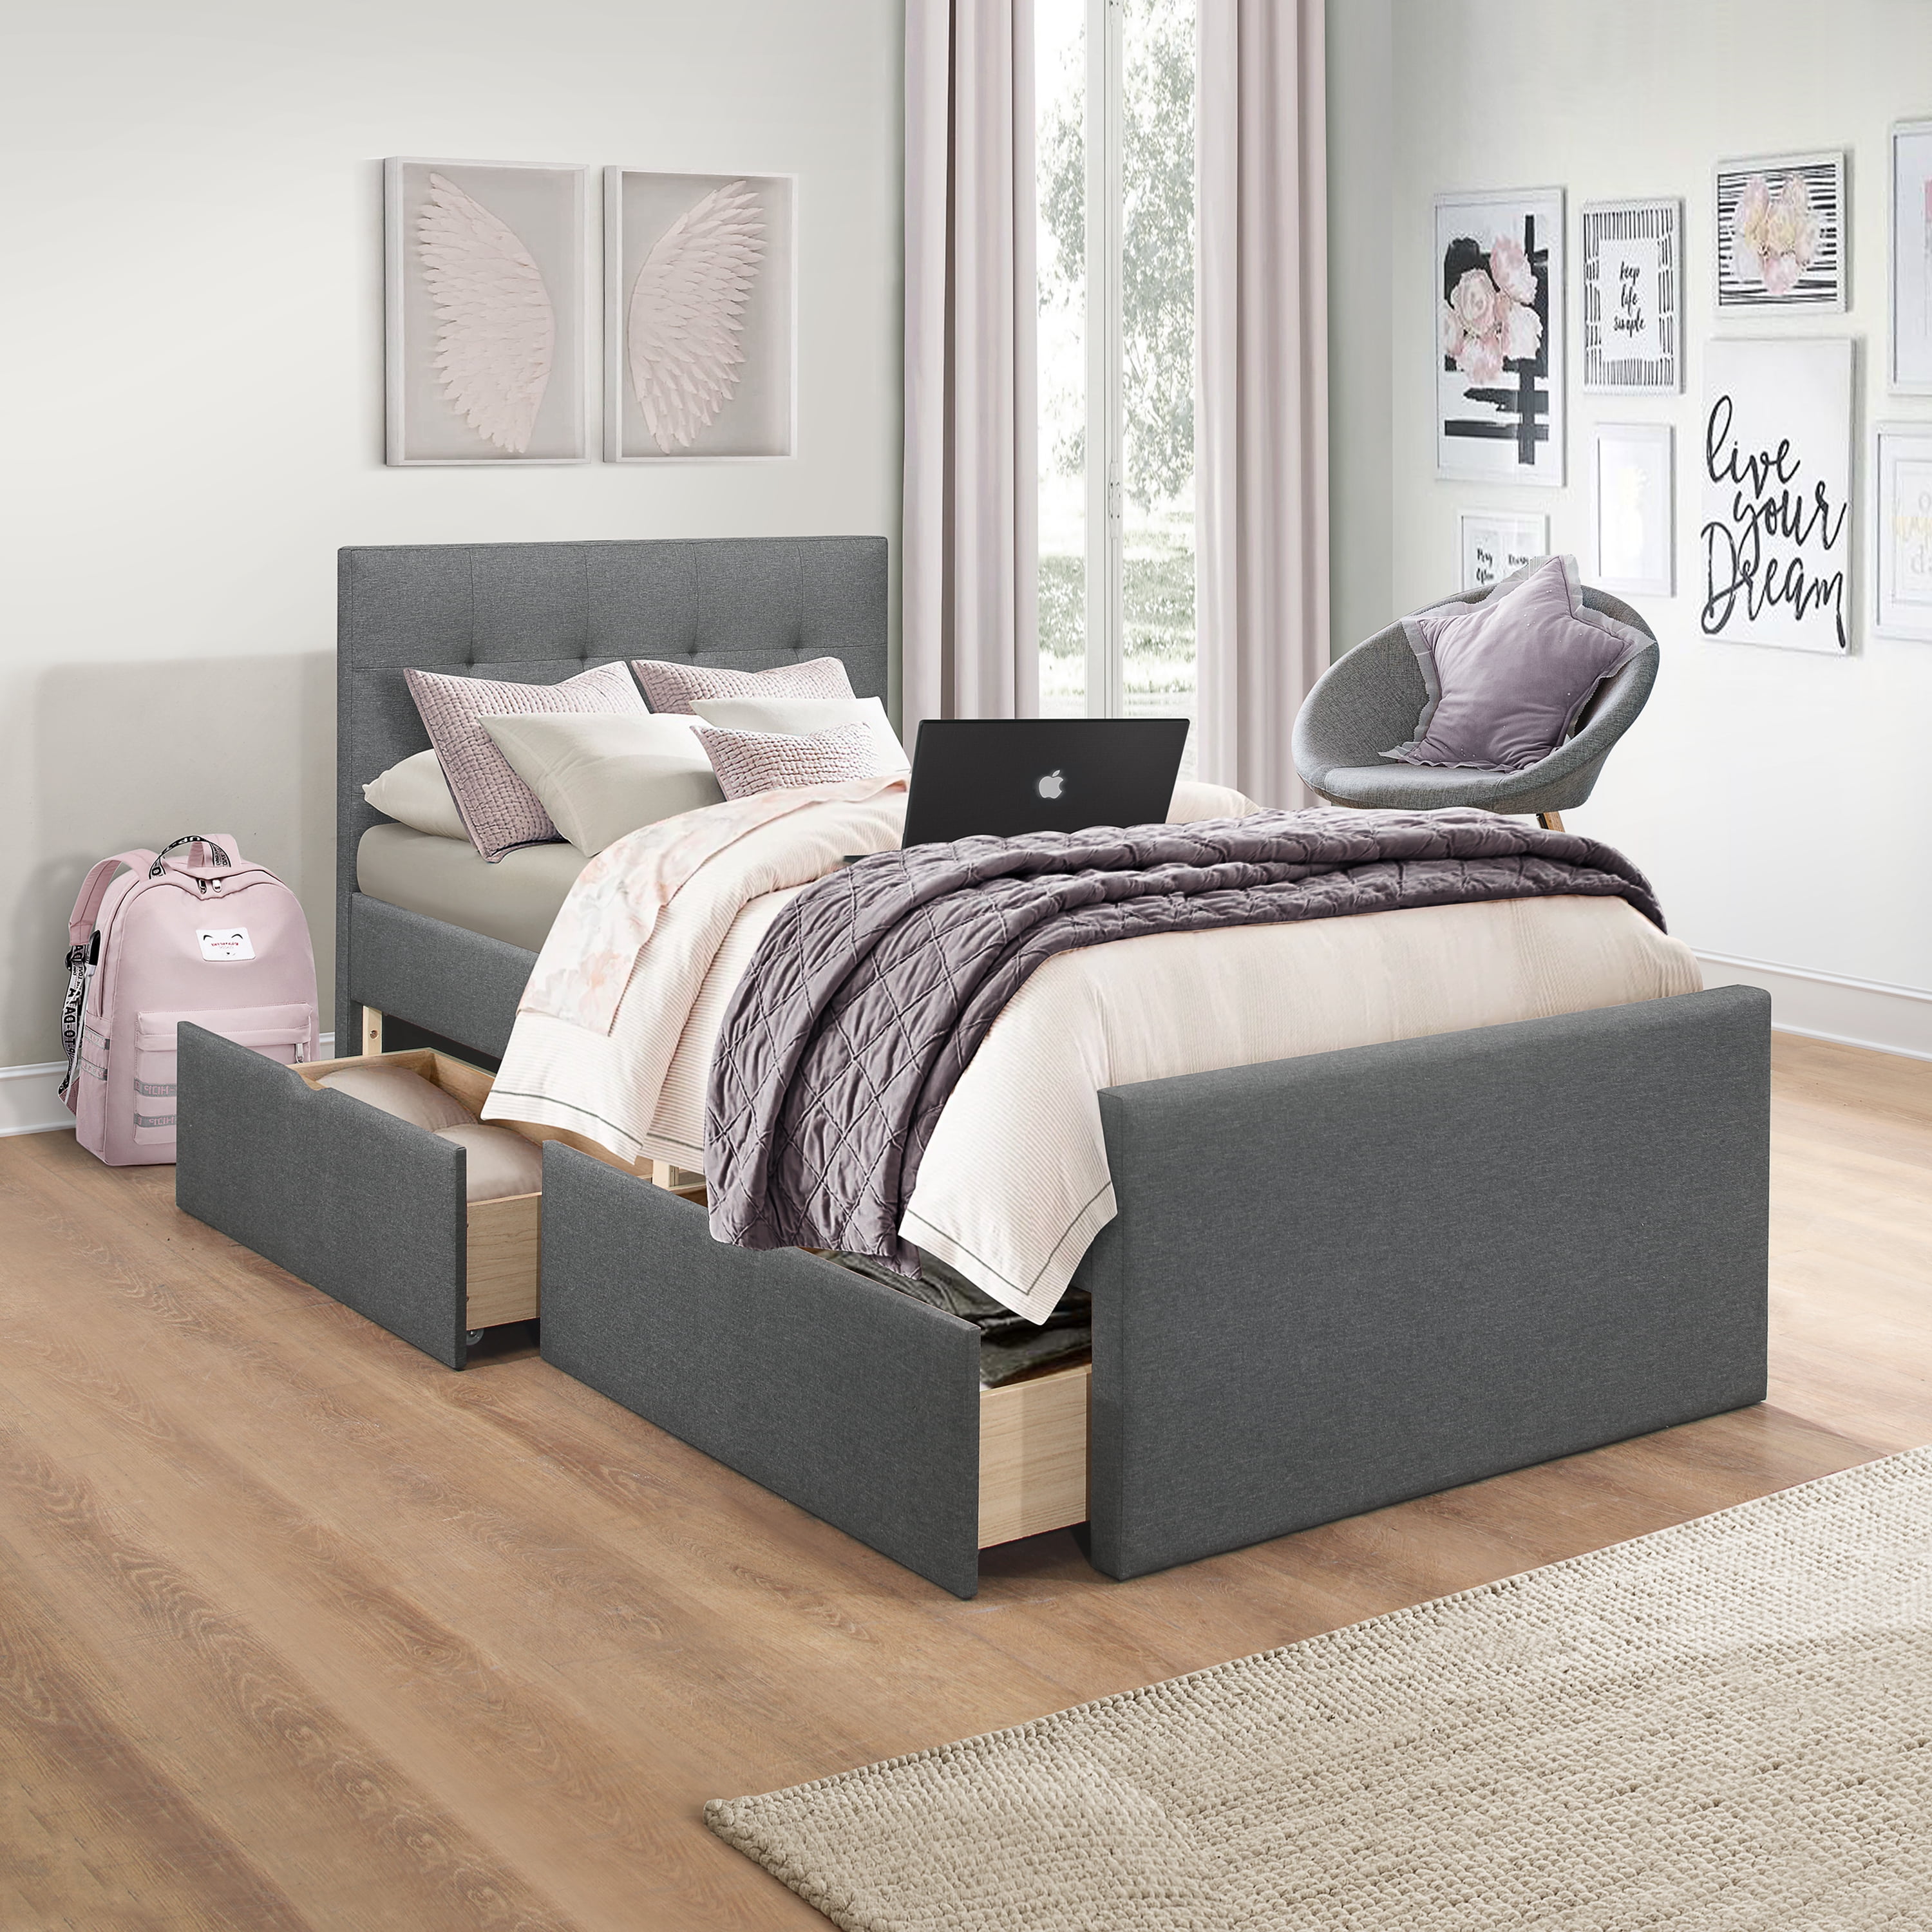 Twin Size Platform Bed Frame w/Tufted Headboard Gray Upholstered Bed Wood Frame 